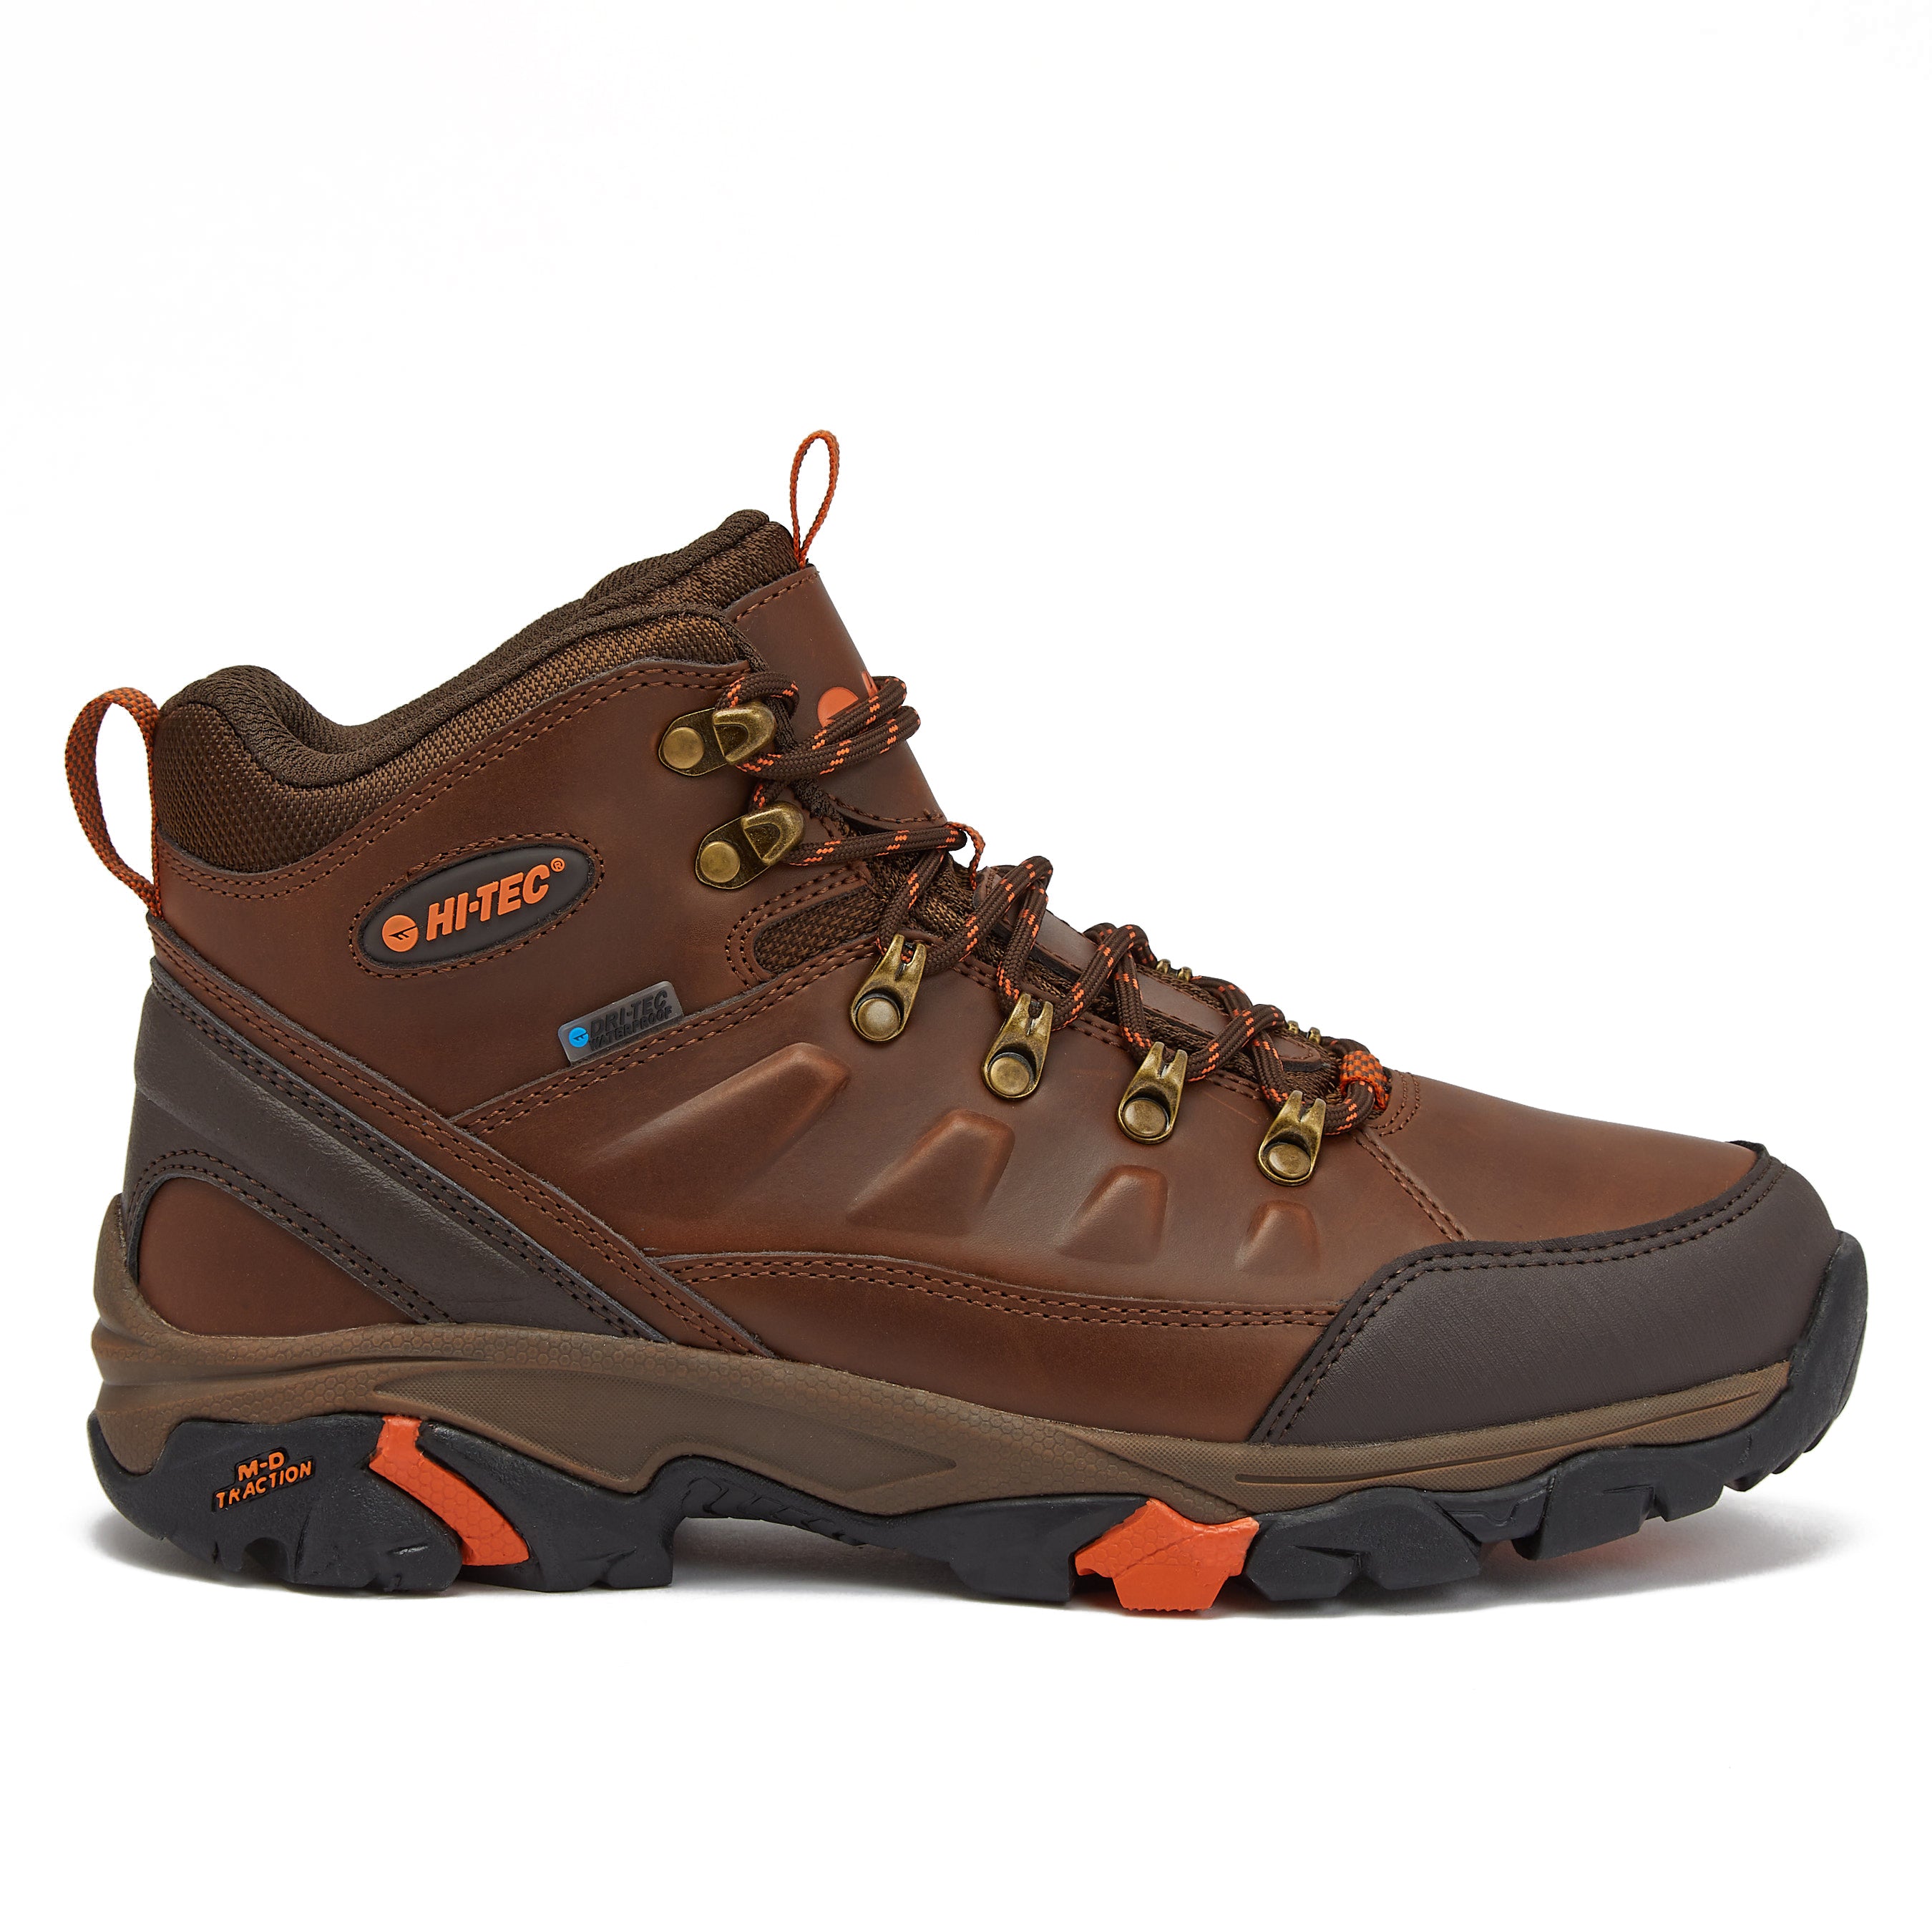 Men's Waterproof Hiking Boots, Outdoor Hiking Shoes for Men